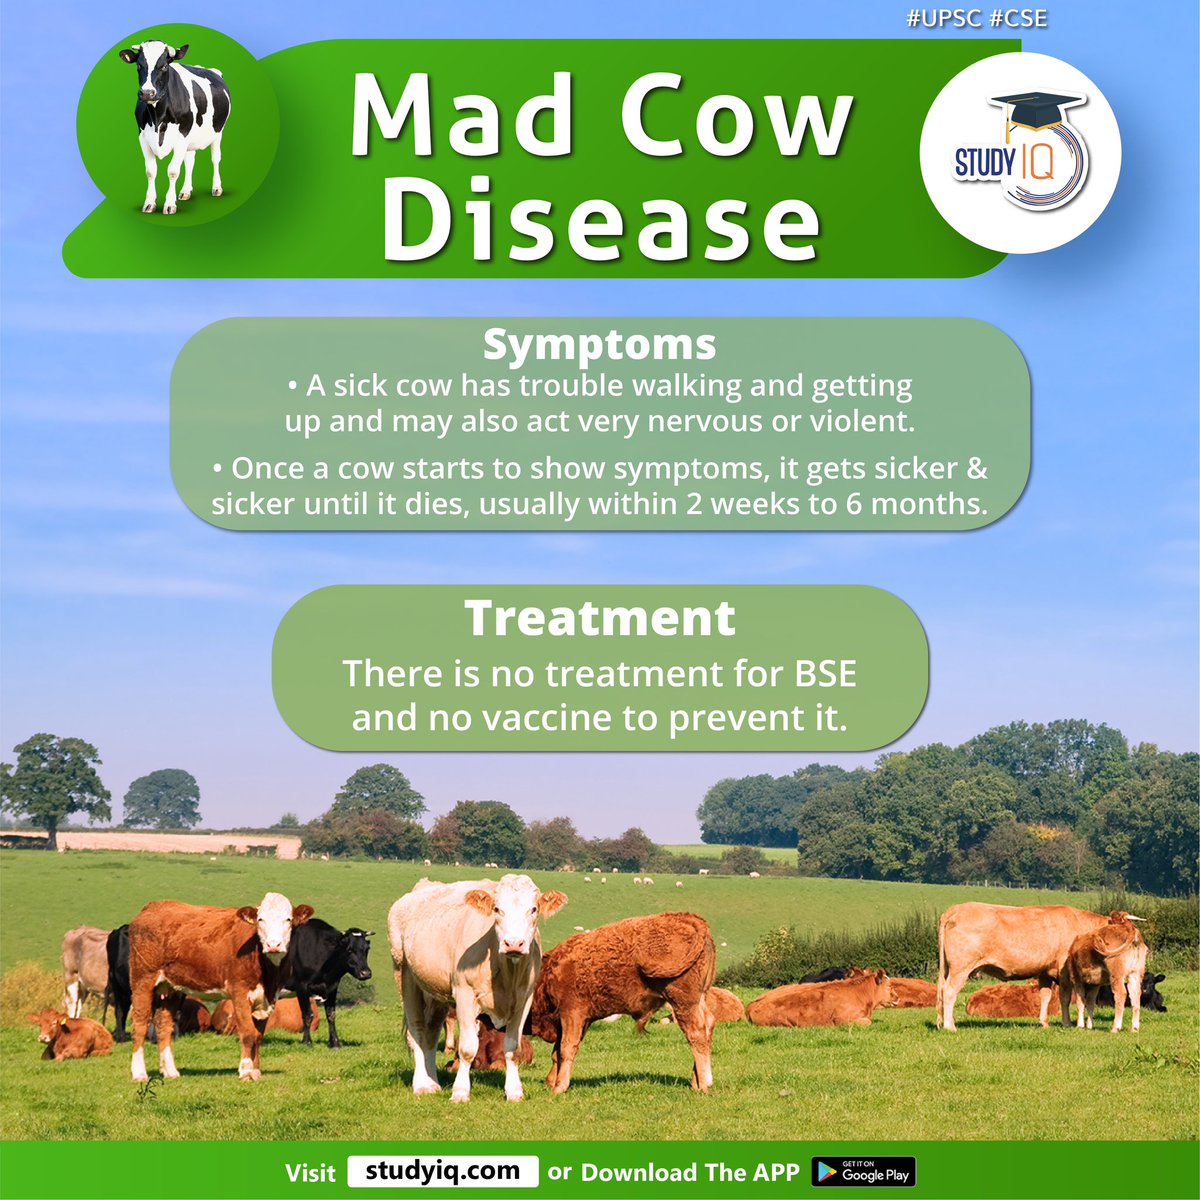 Mad Cow Disease

#madcowdisease #brazil #china #cowdisease #bovinspongiformencephalopathy #bse #centralnervoussystem #cattle #cellsurfaces #nervoussystems #brain #spinalcord #symtoms #upsc #cse #ips #ias #worldaffairs